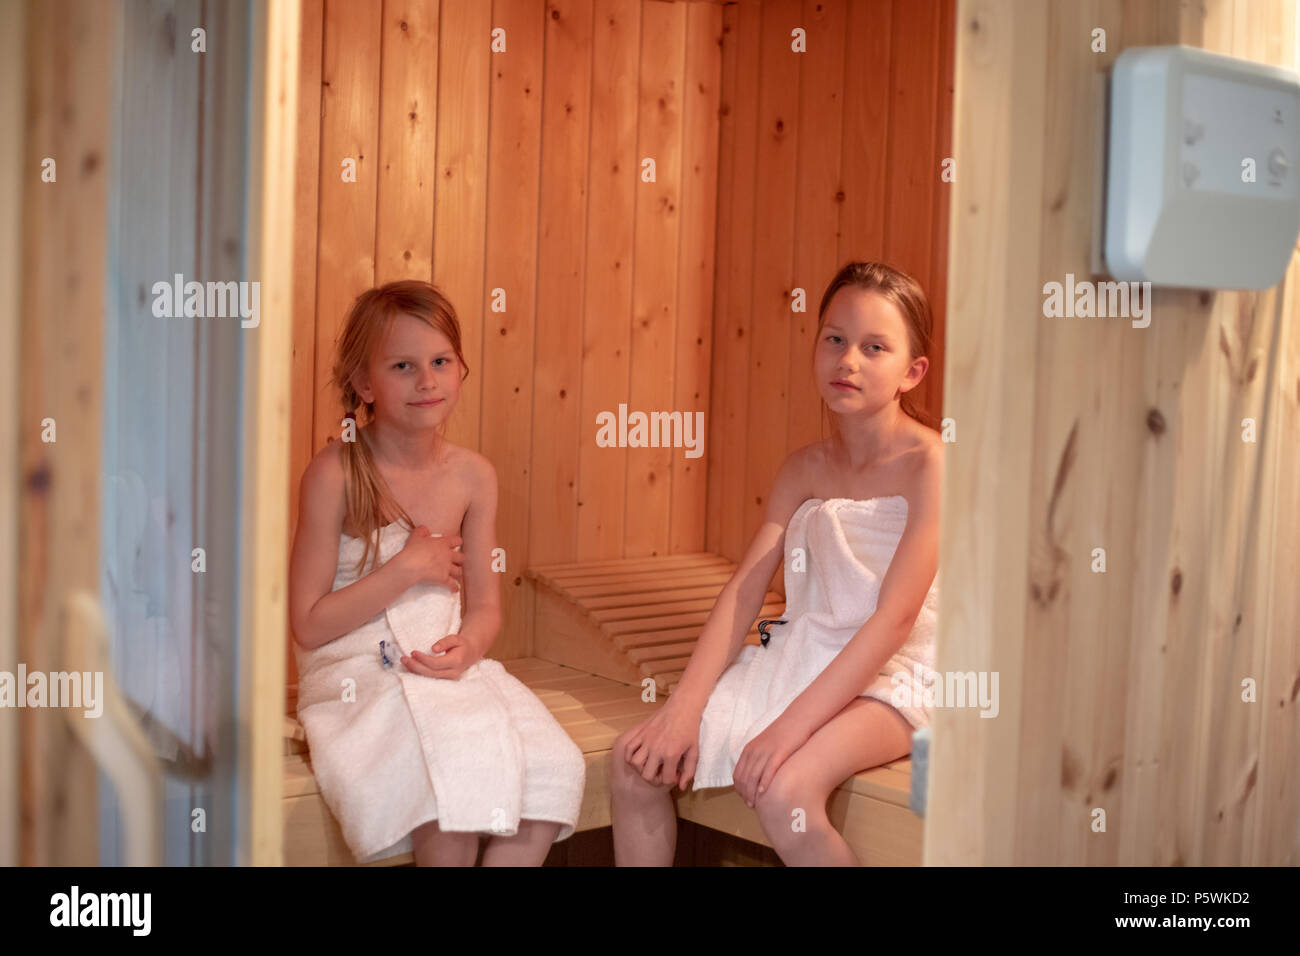 amateur teens sauna anal Sex Images Hq